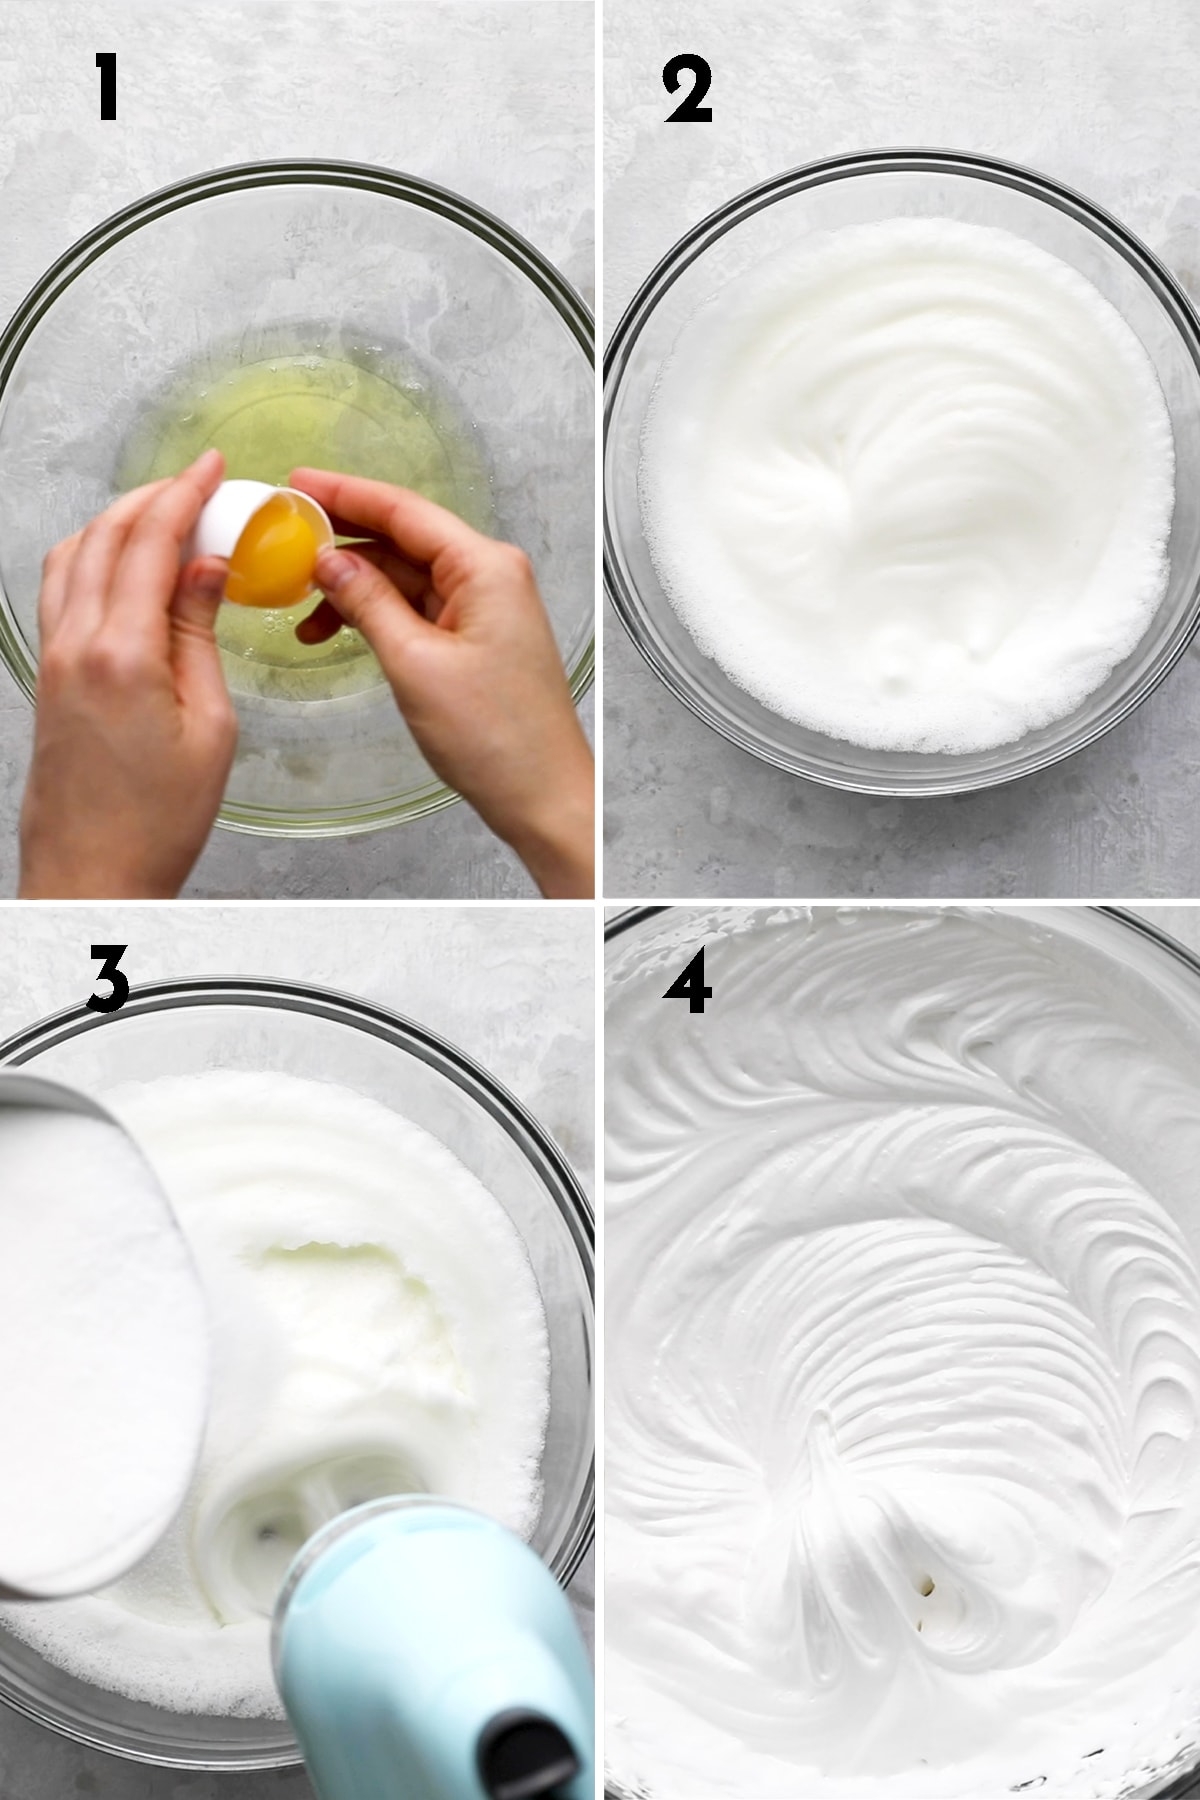 instructions to make the pavlova meringue: separtae the eggs, beat egg whites until soft peaks form, add sugar, beat until stiff peaks form.